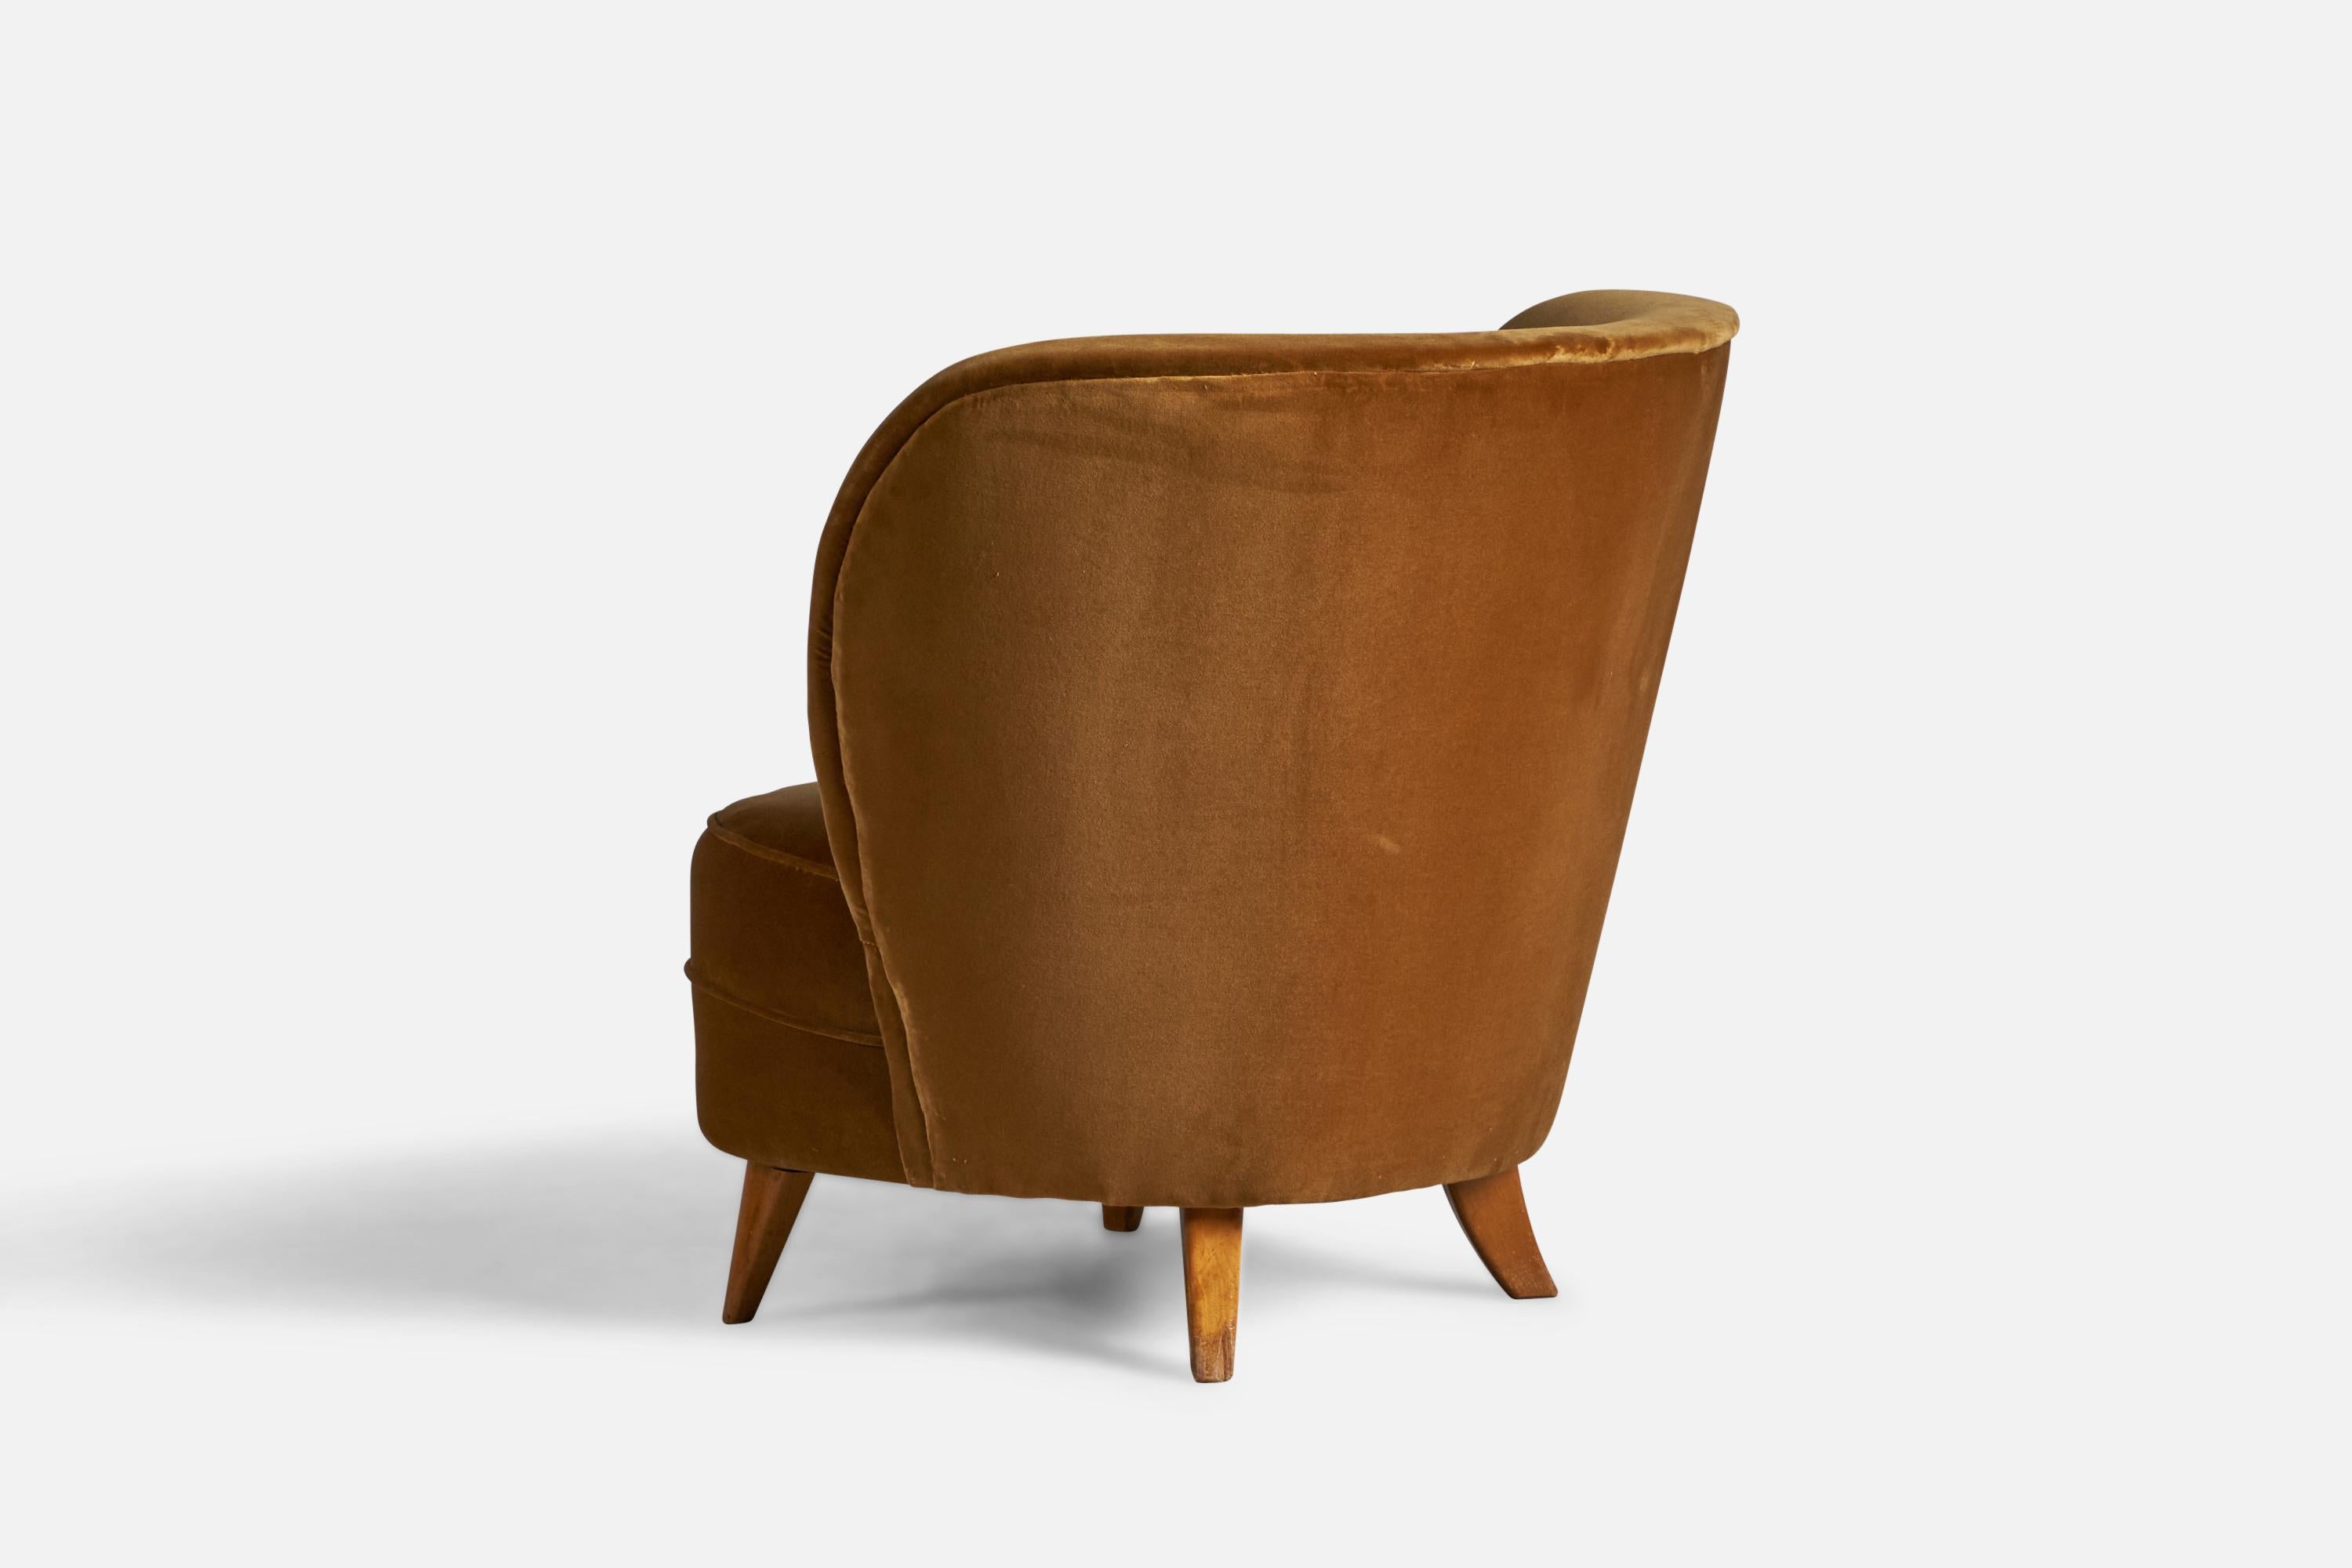 Swedish Tor Wolfenstein, Lounge Chairs, Wood, Velvet, Sweden, 1940s For Sale